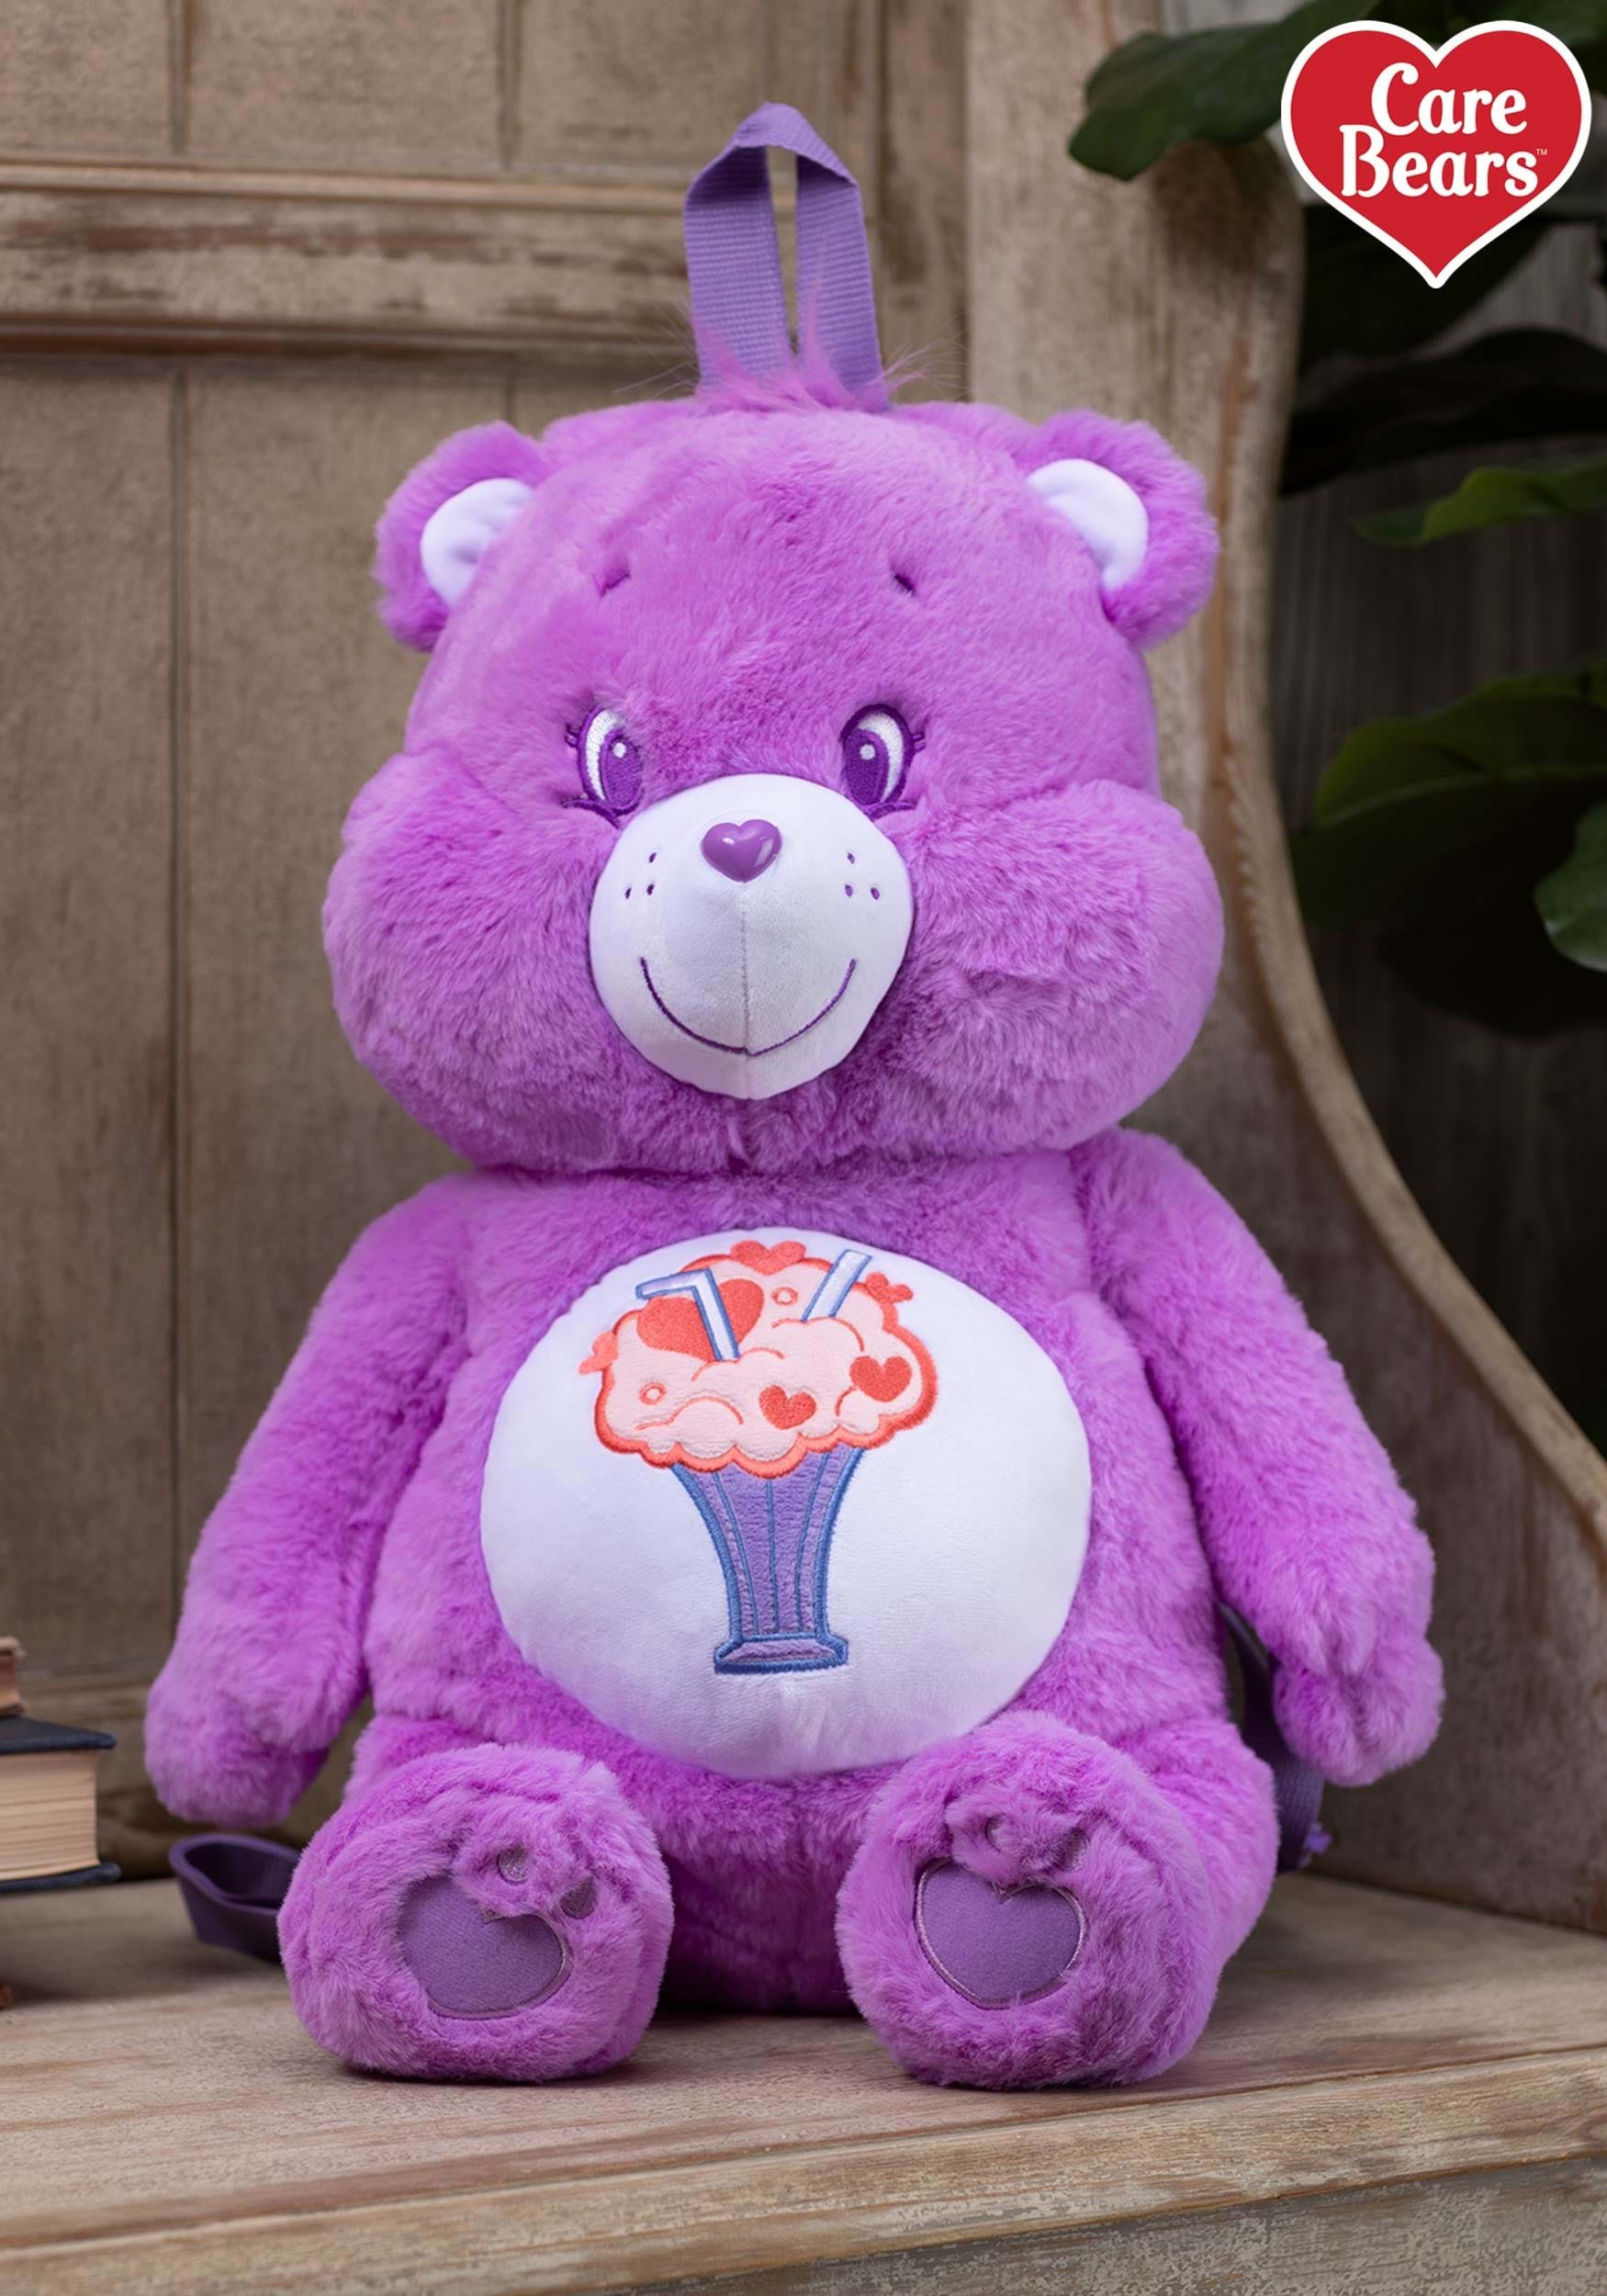 Care Bears Share Bear Plush Mochila Multicolor